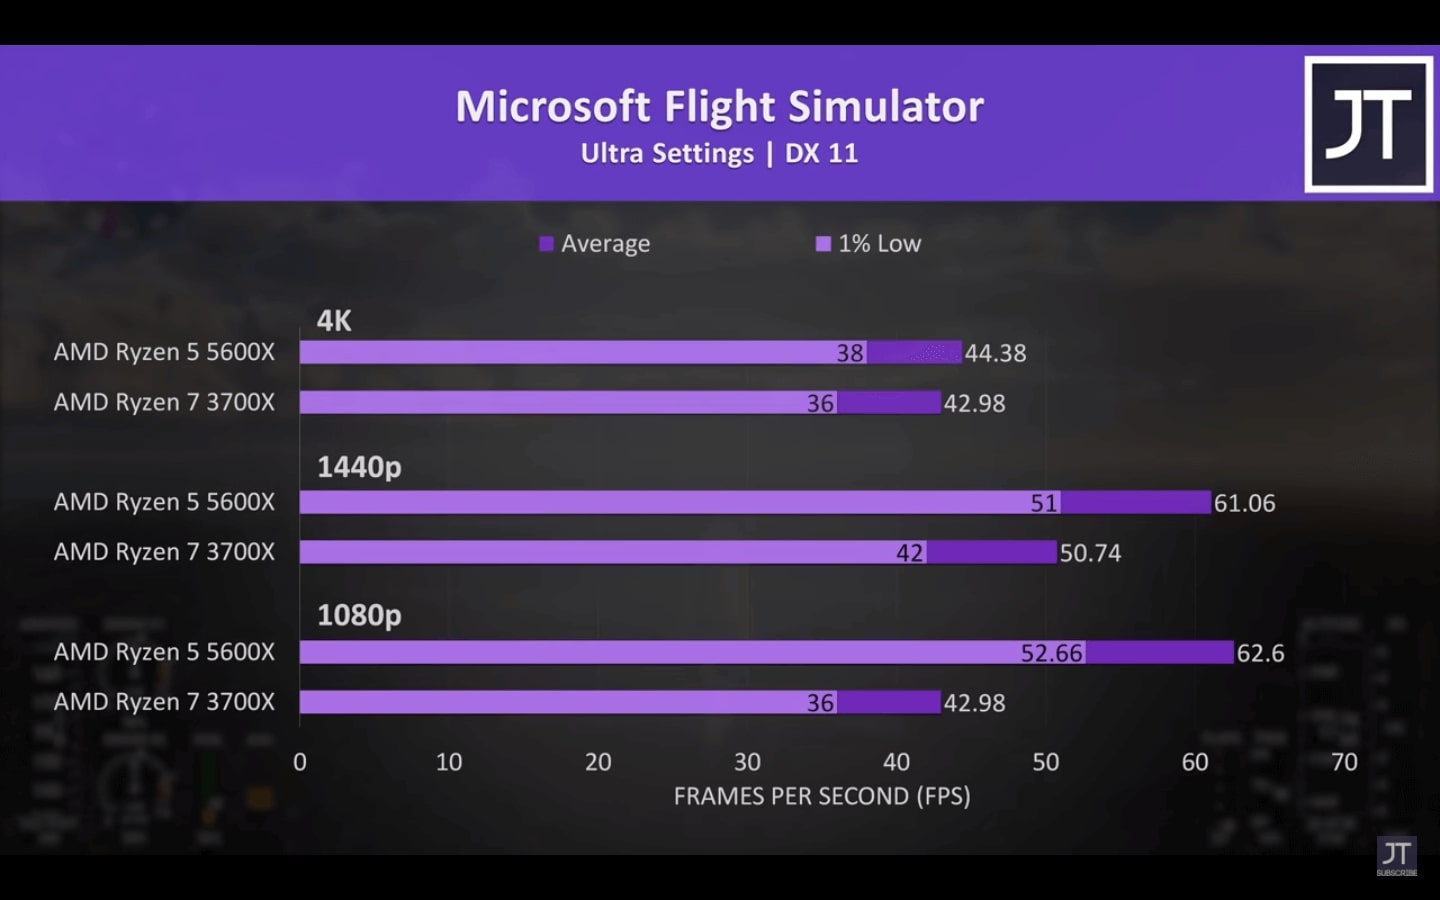 Microsoft Flight Simulator - Ryzen 5 5600x vs Ryzen 7 3700x